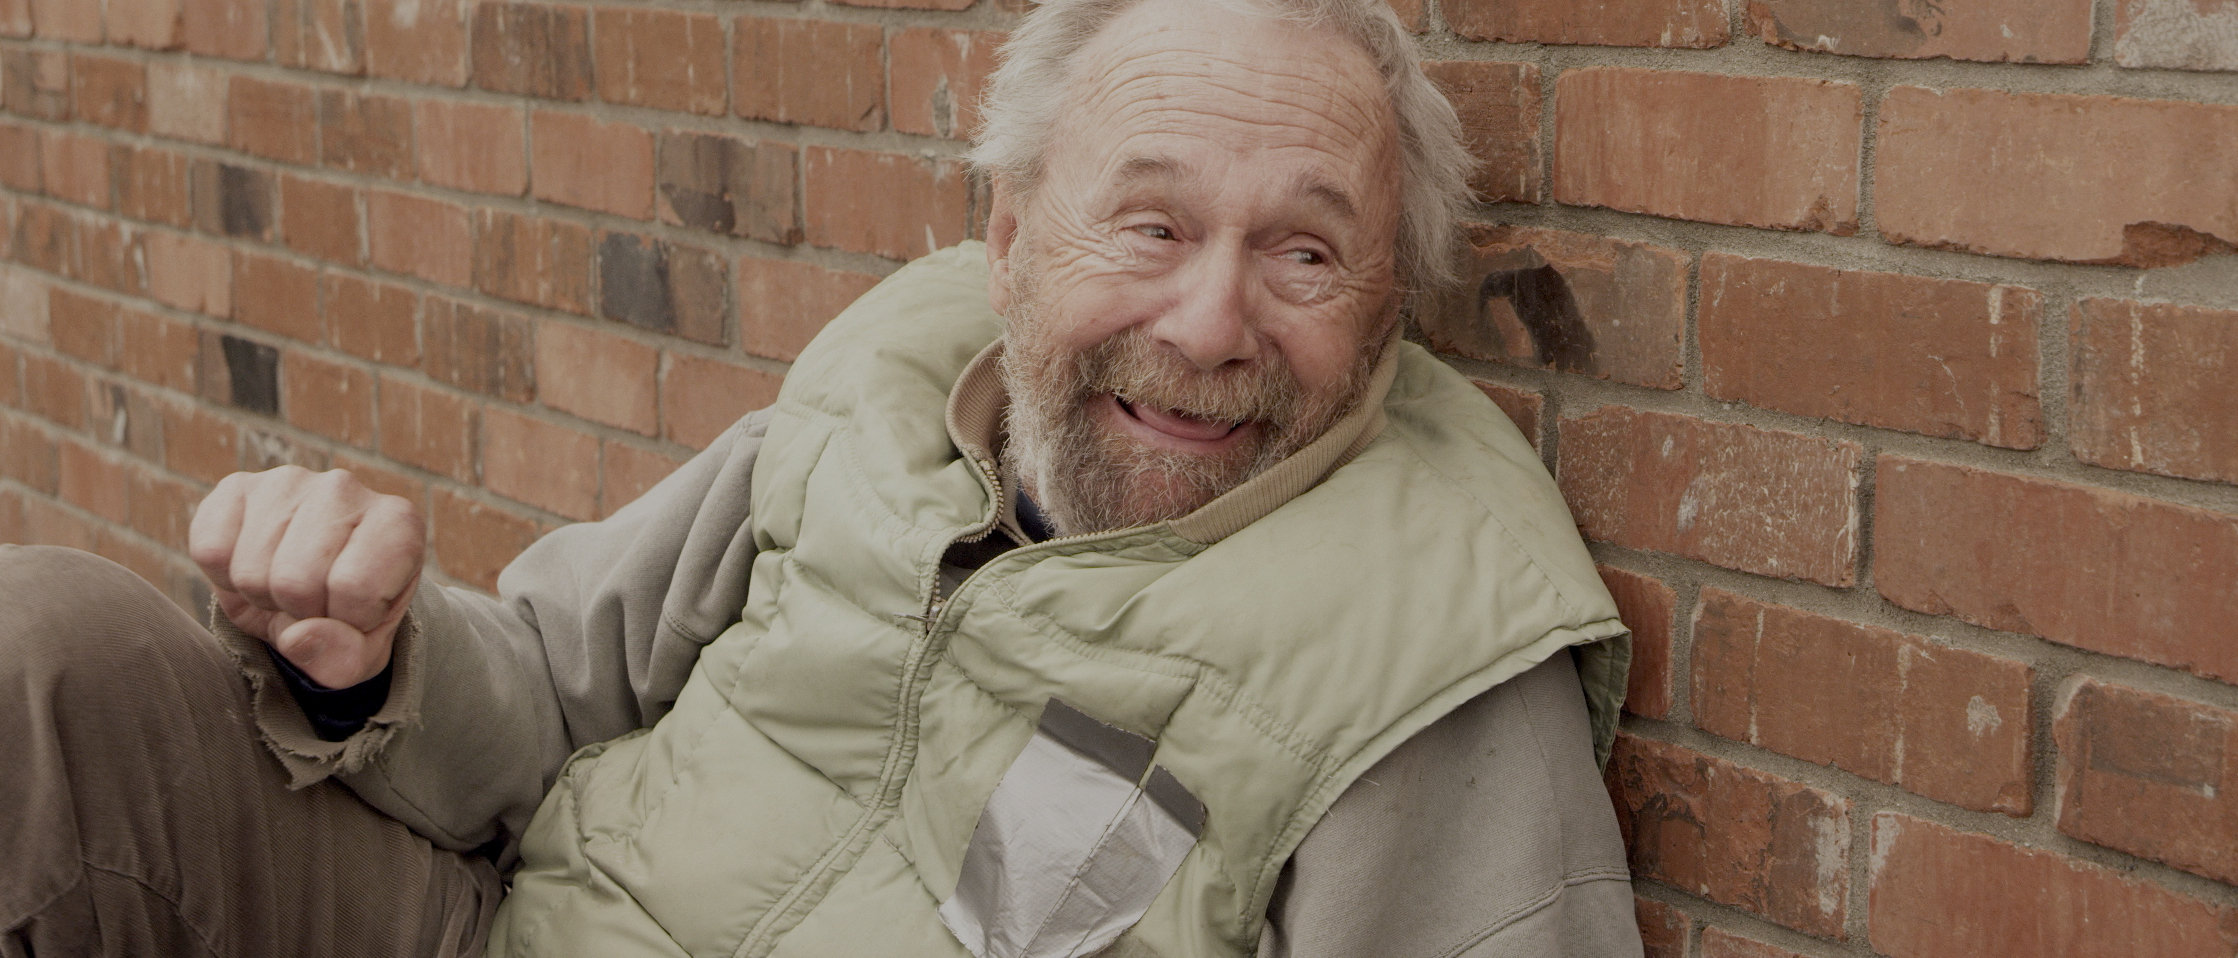 Douglas Rowe as Homeless Man in the film WALK-IN